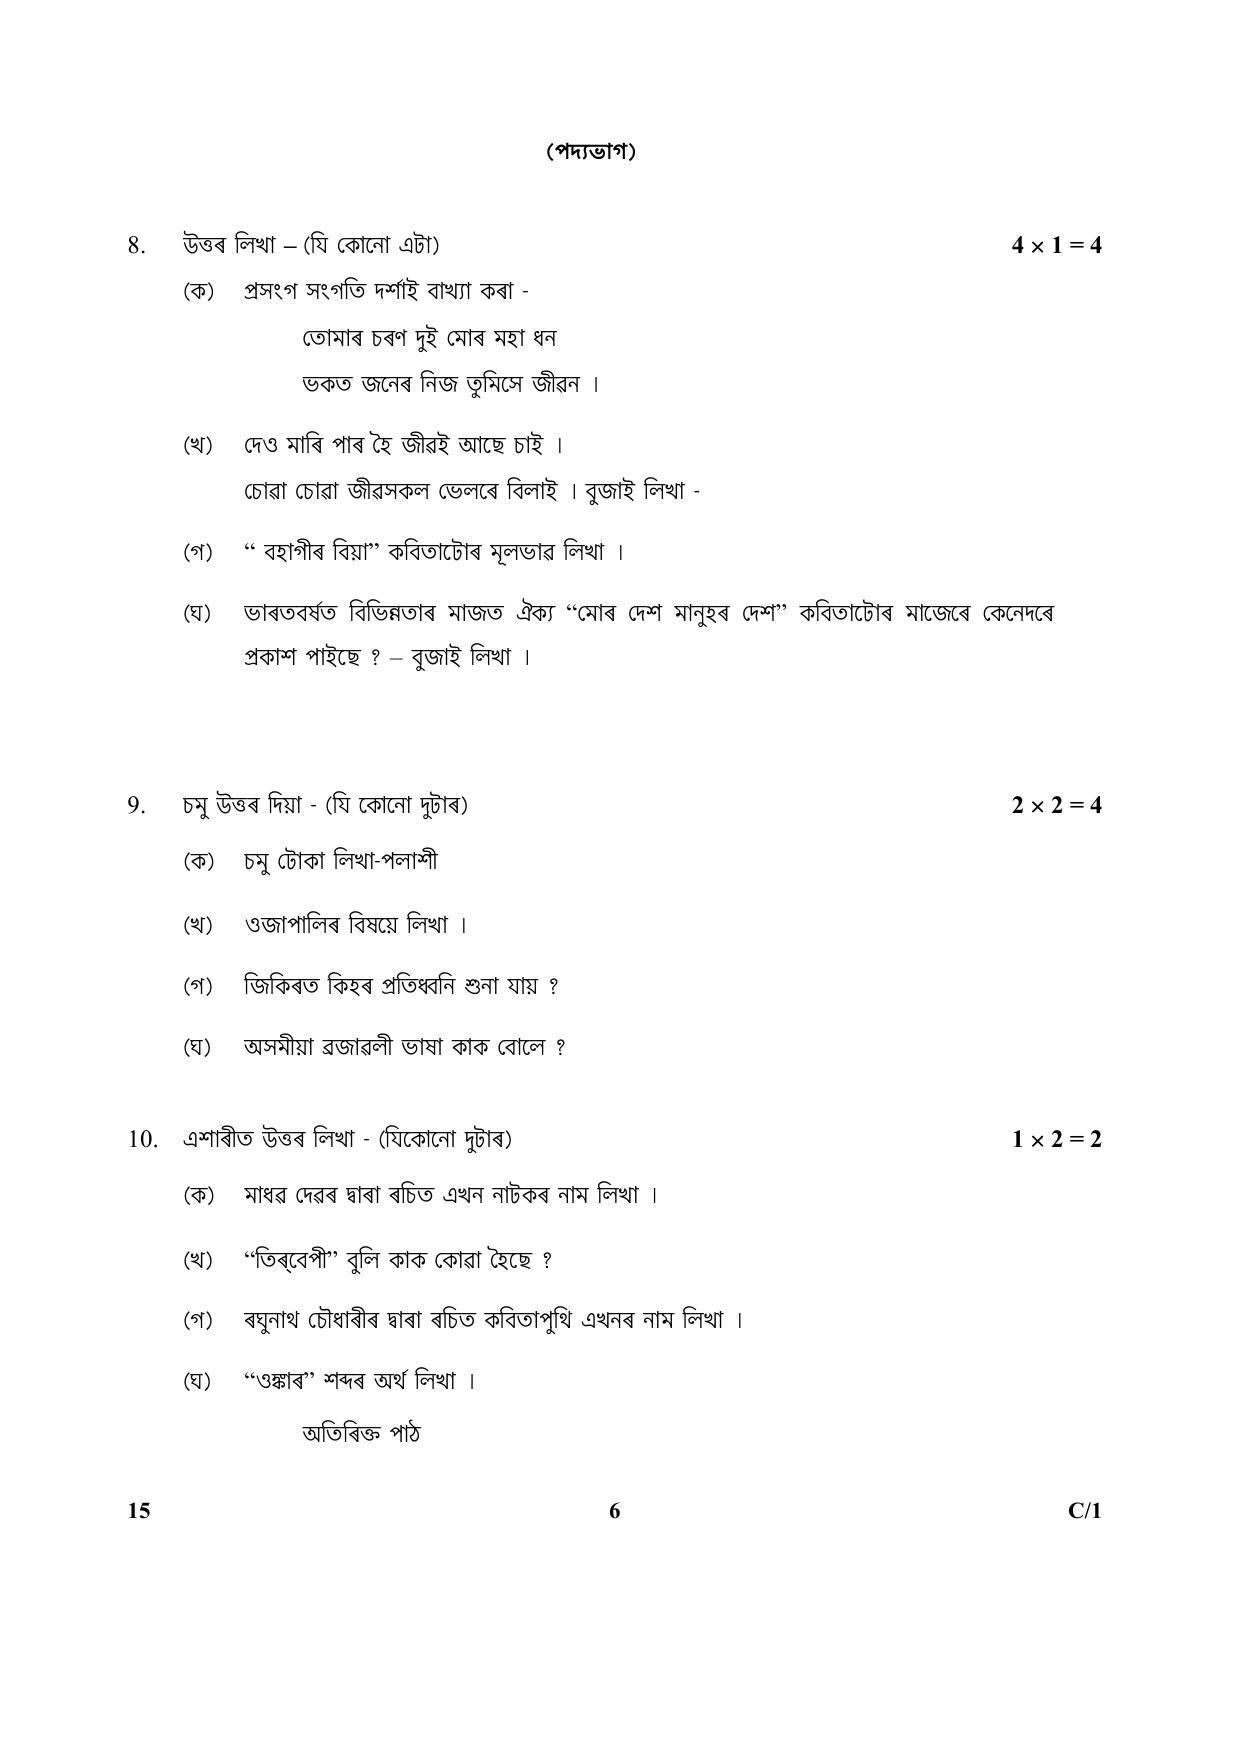 CBSE Class 10 15 (Assamese) 2018 Compartment Question Paper - Page 6